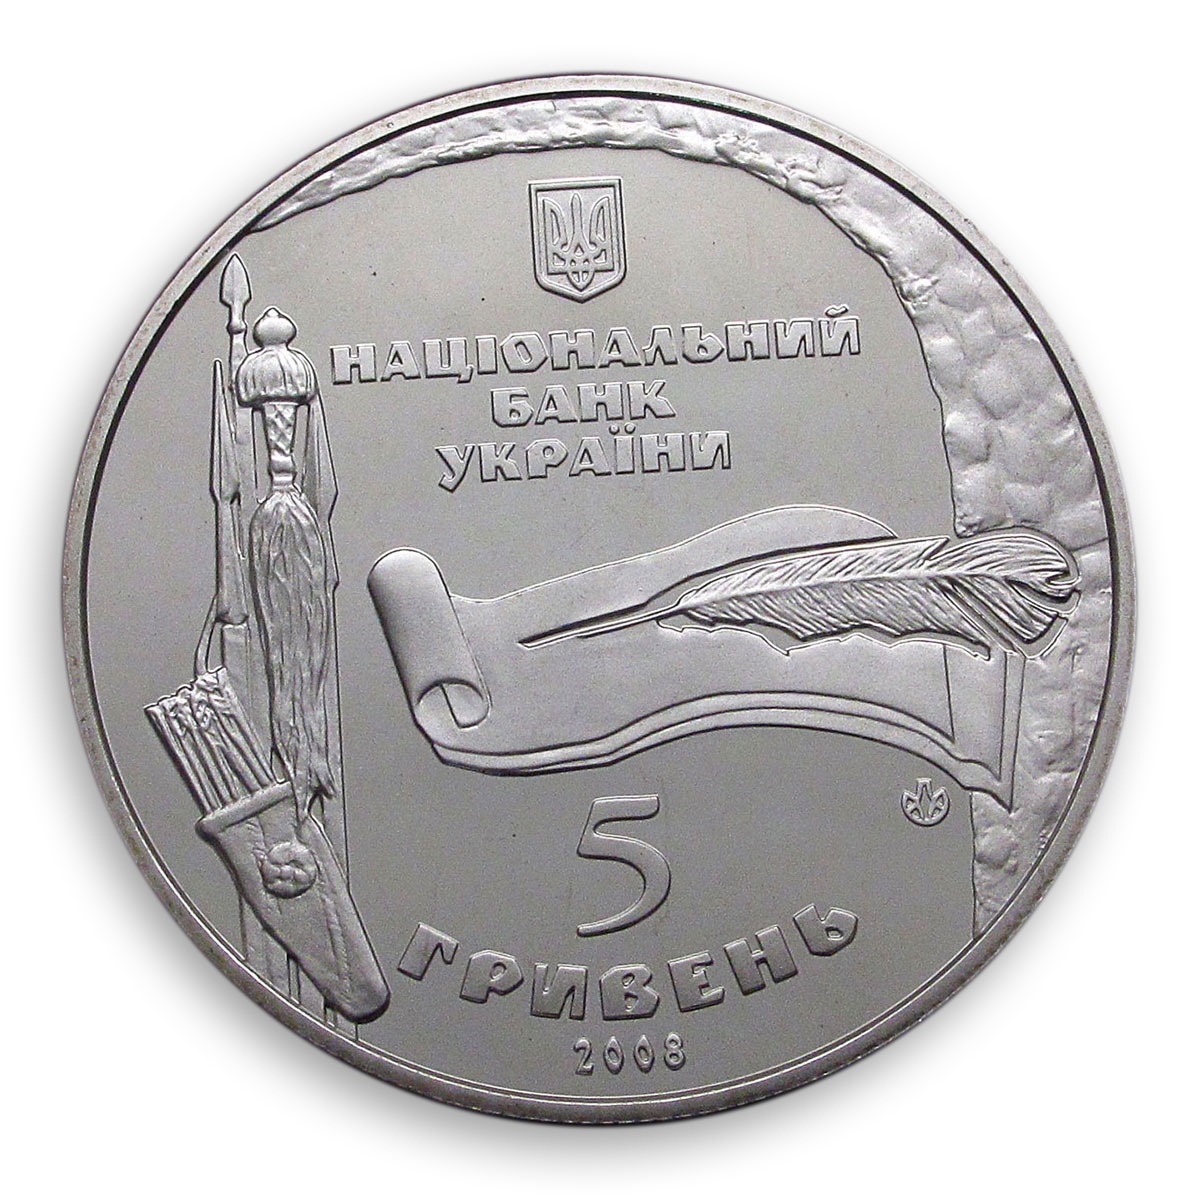 Ukraine 5 hryvnia 975 years Bohuslav (Boguslav) Kievan Rus town nickel coin 2008